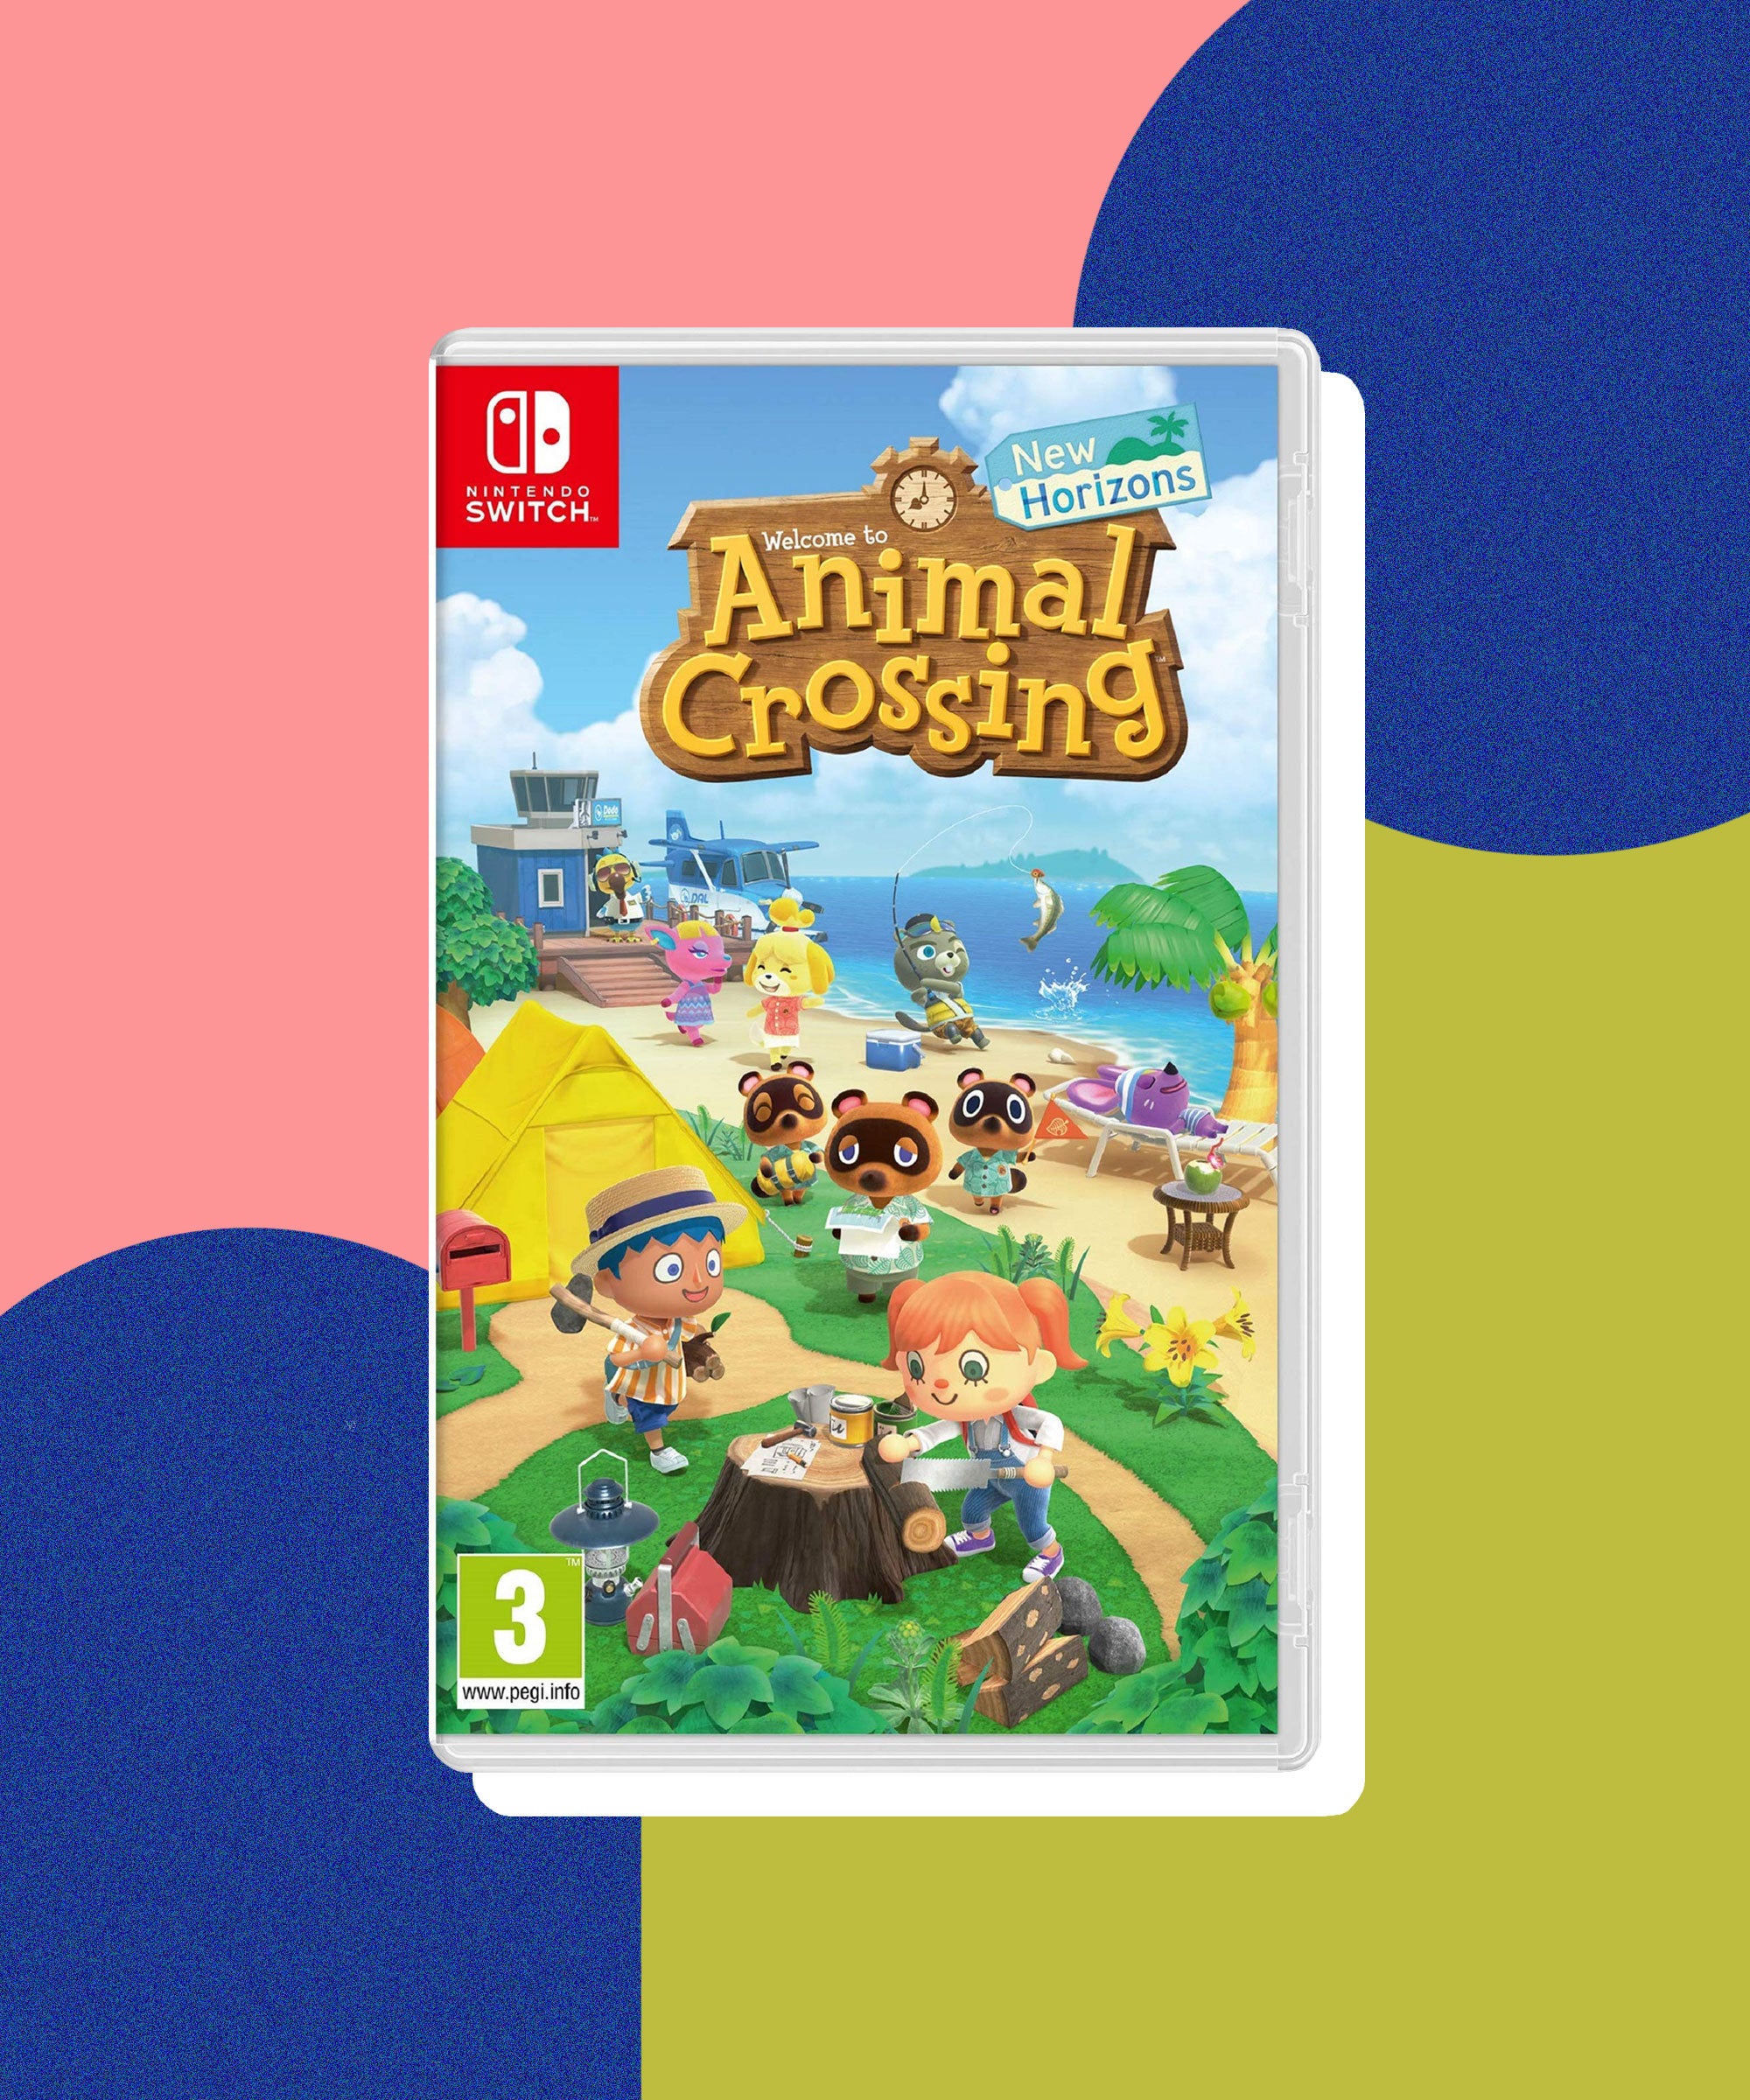 ps4 games similar to animal crossing